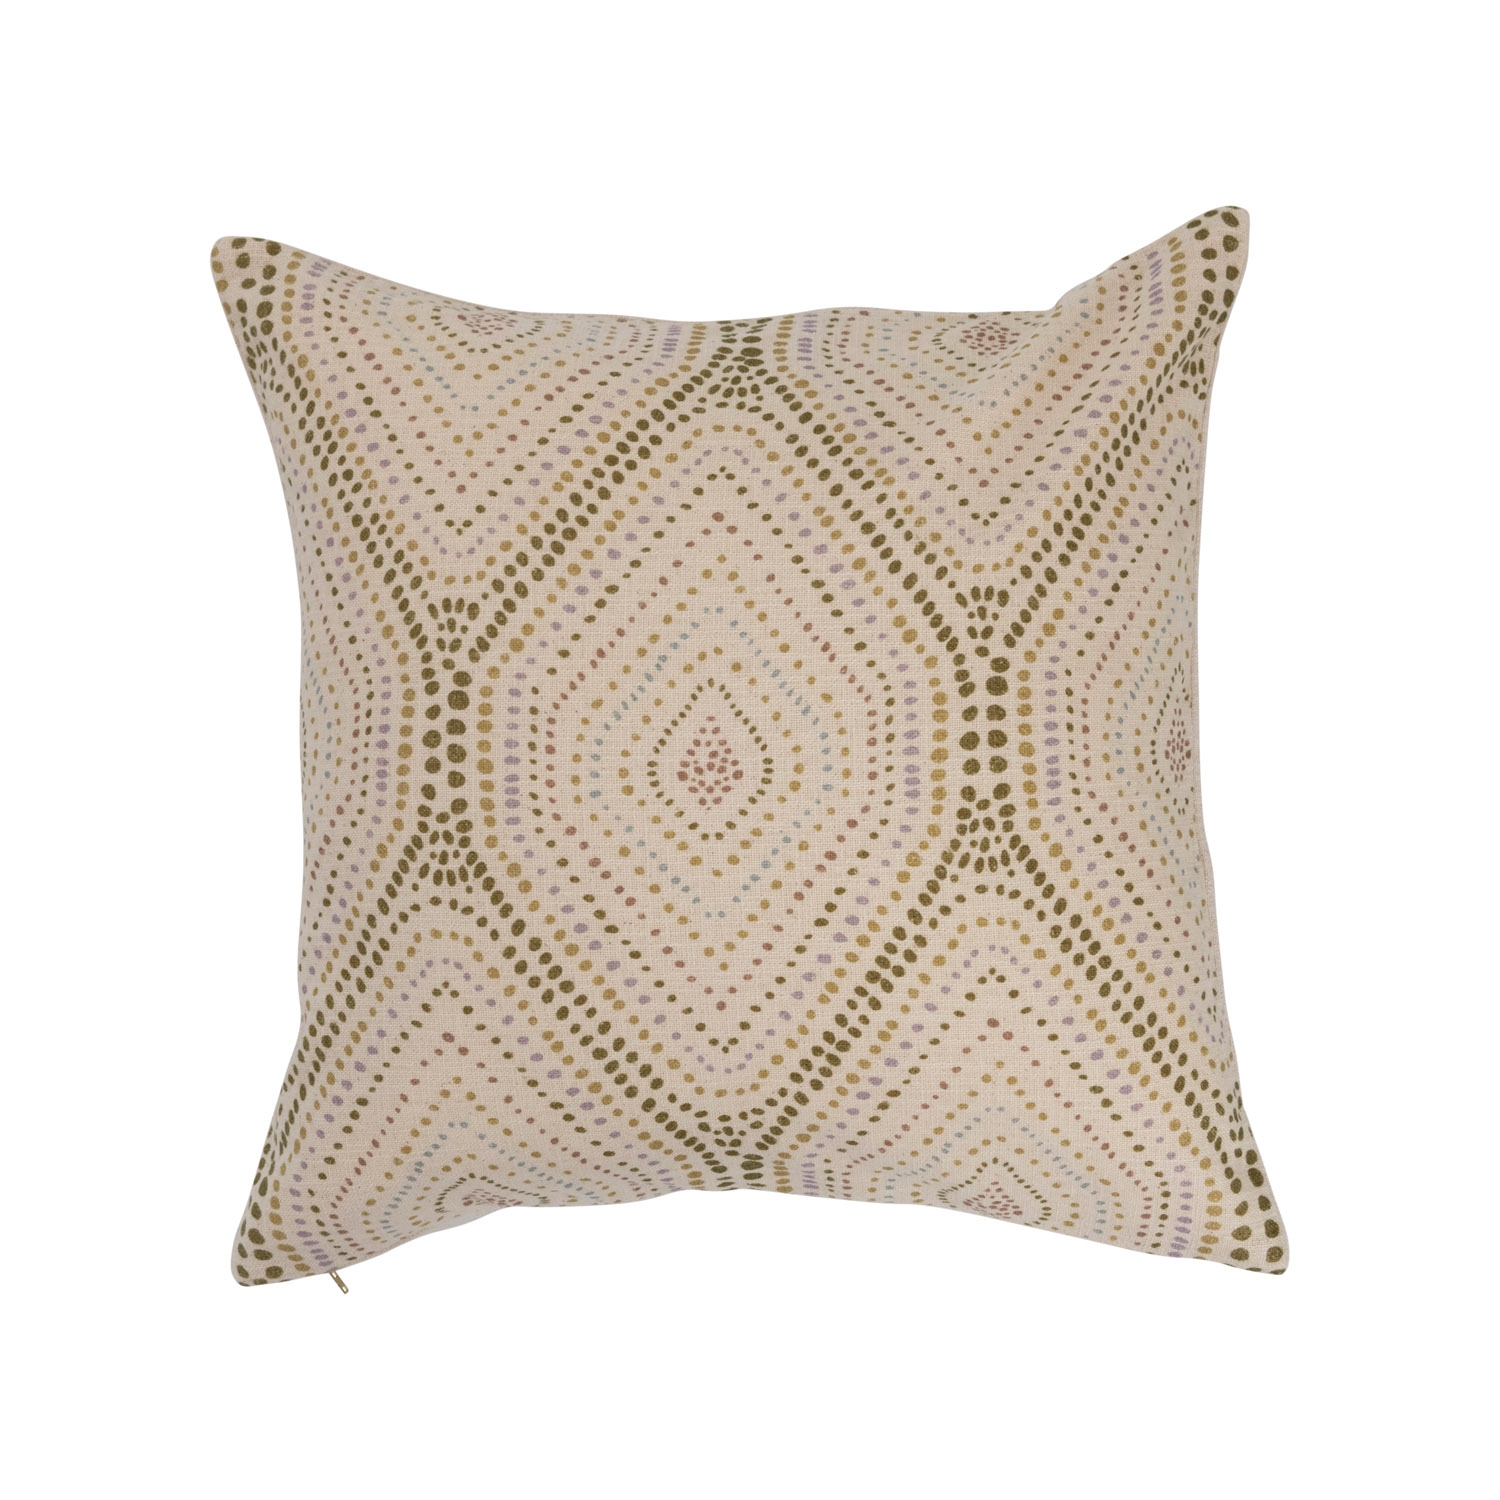 Cotton Slub Pillow with Dot Print - Image 0